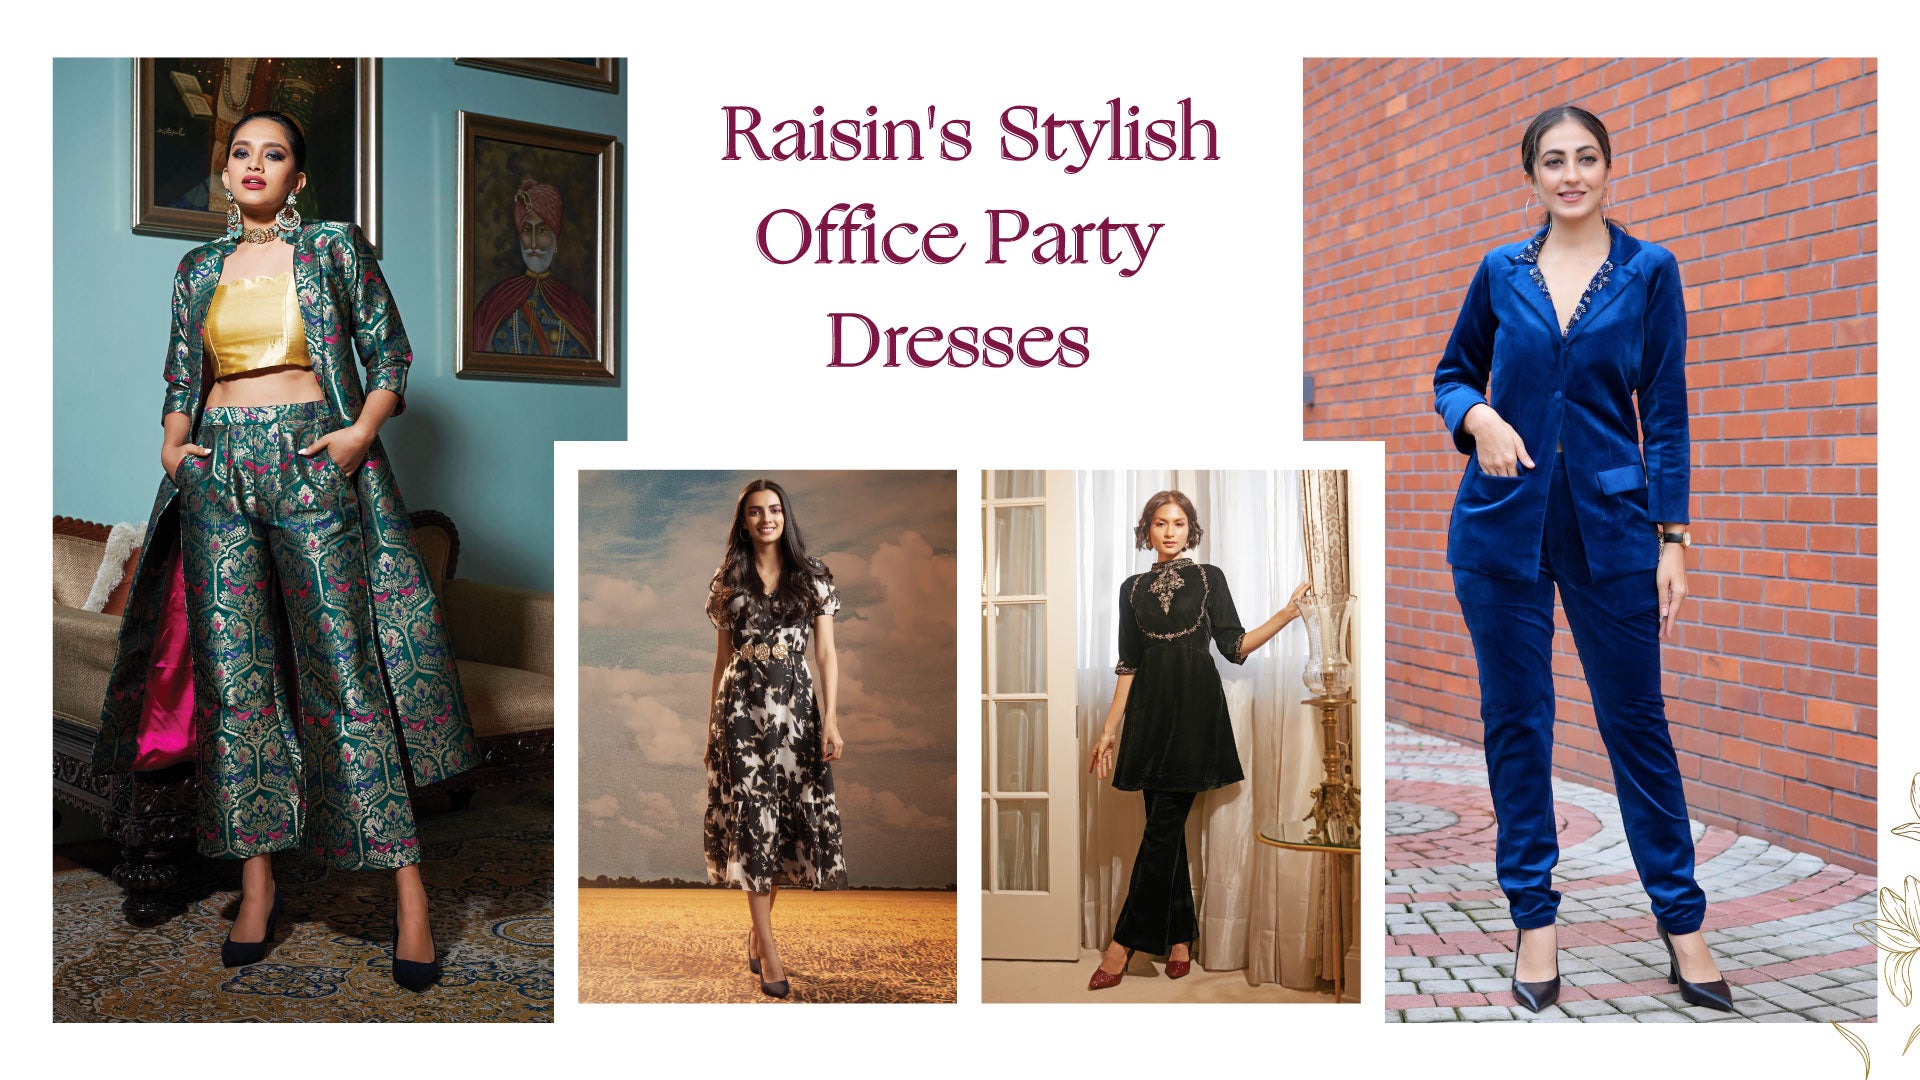 5 Stunning Office Party Dress Ideas